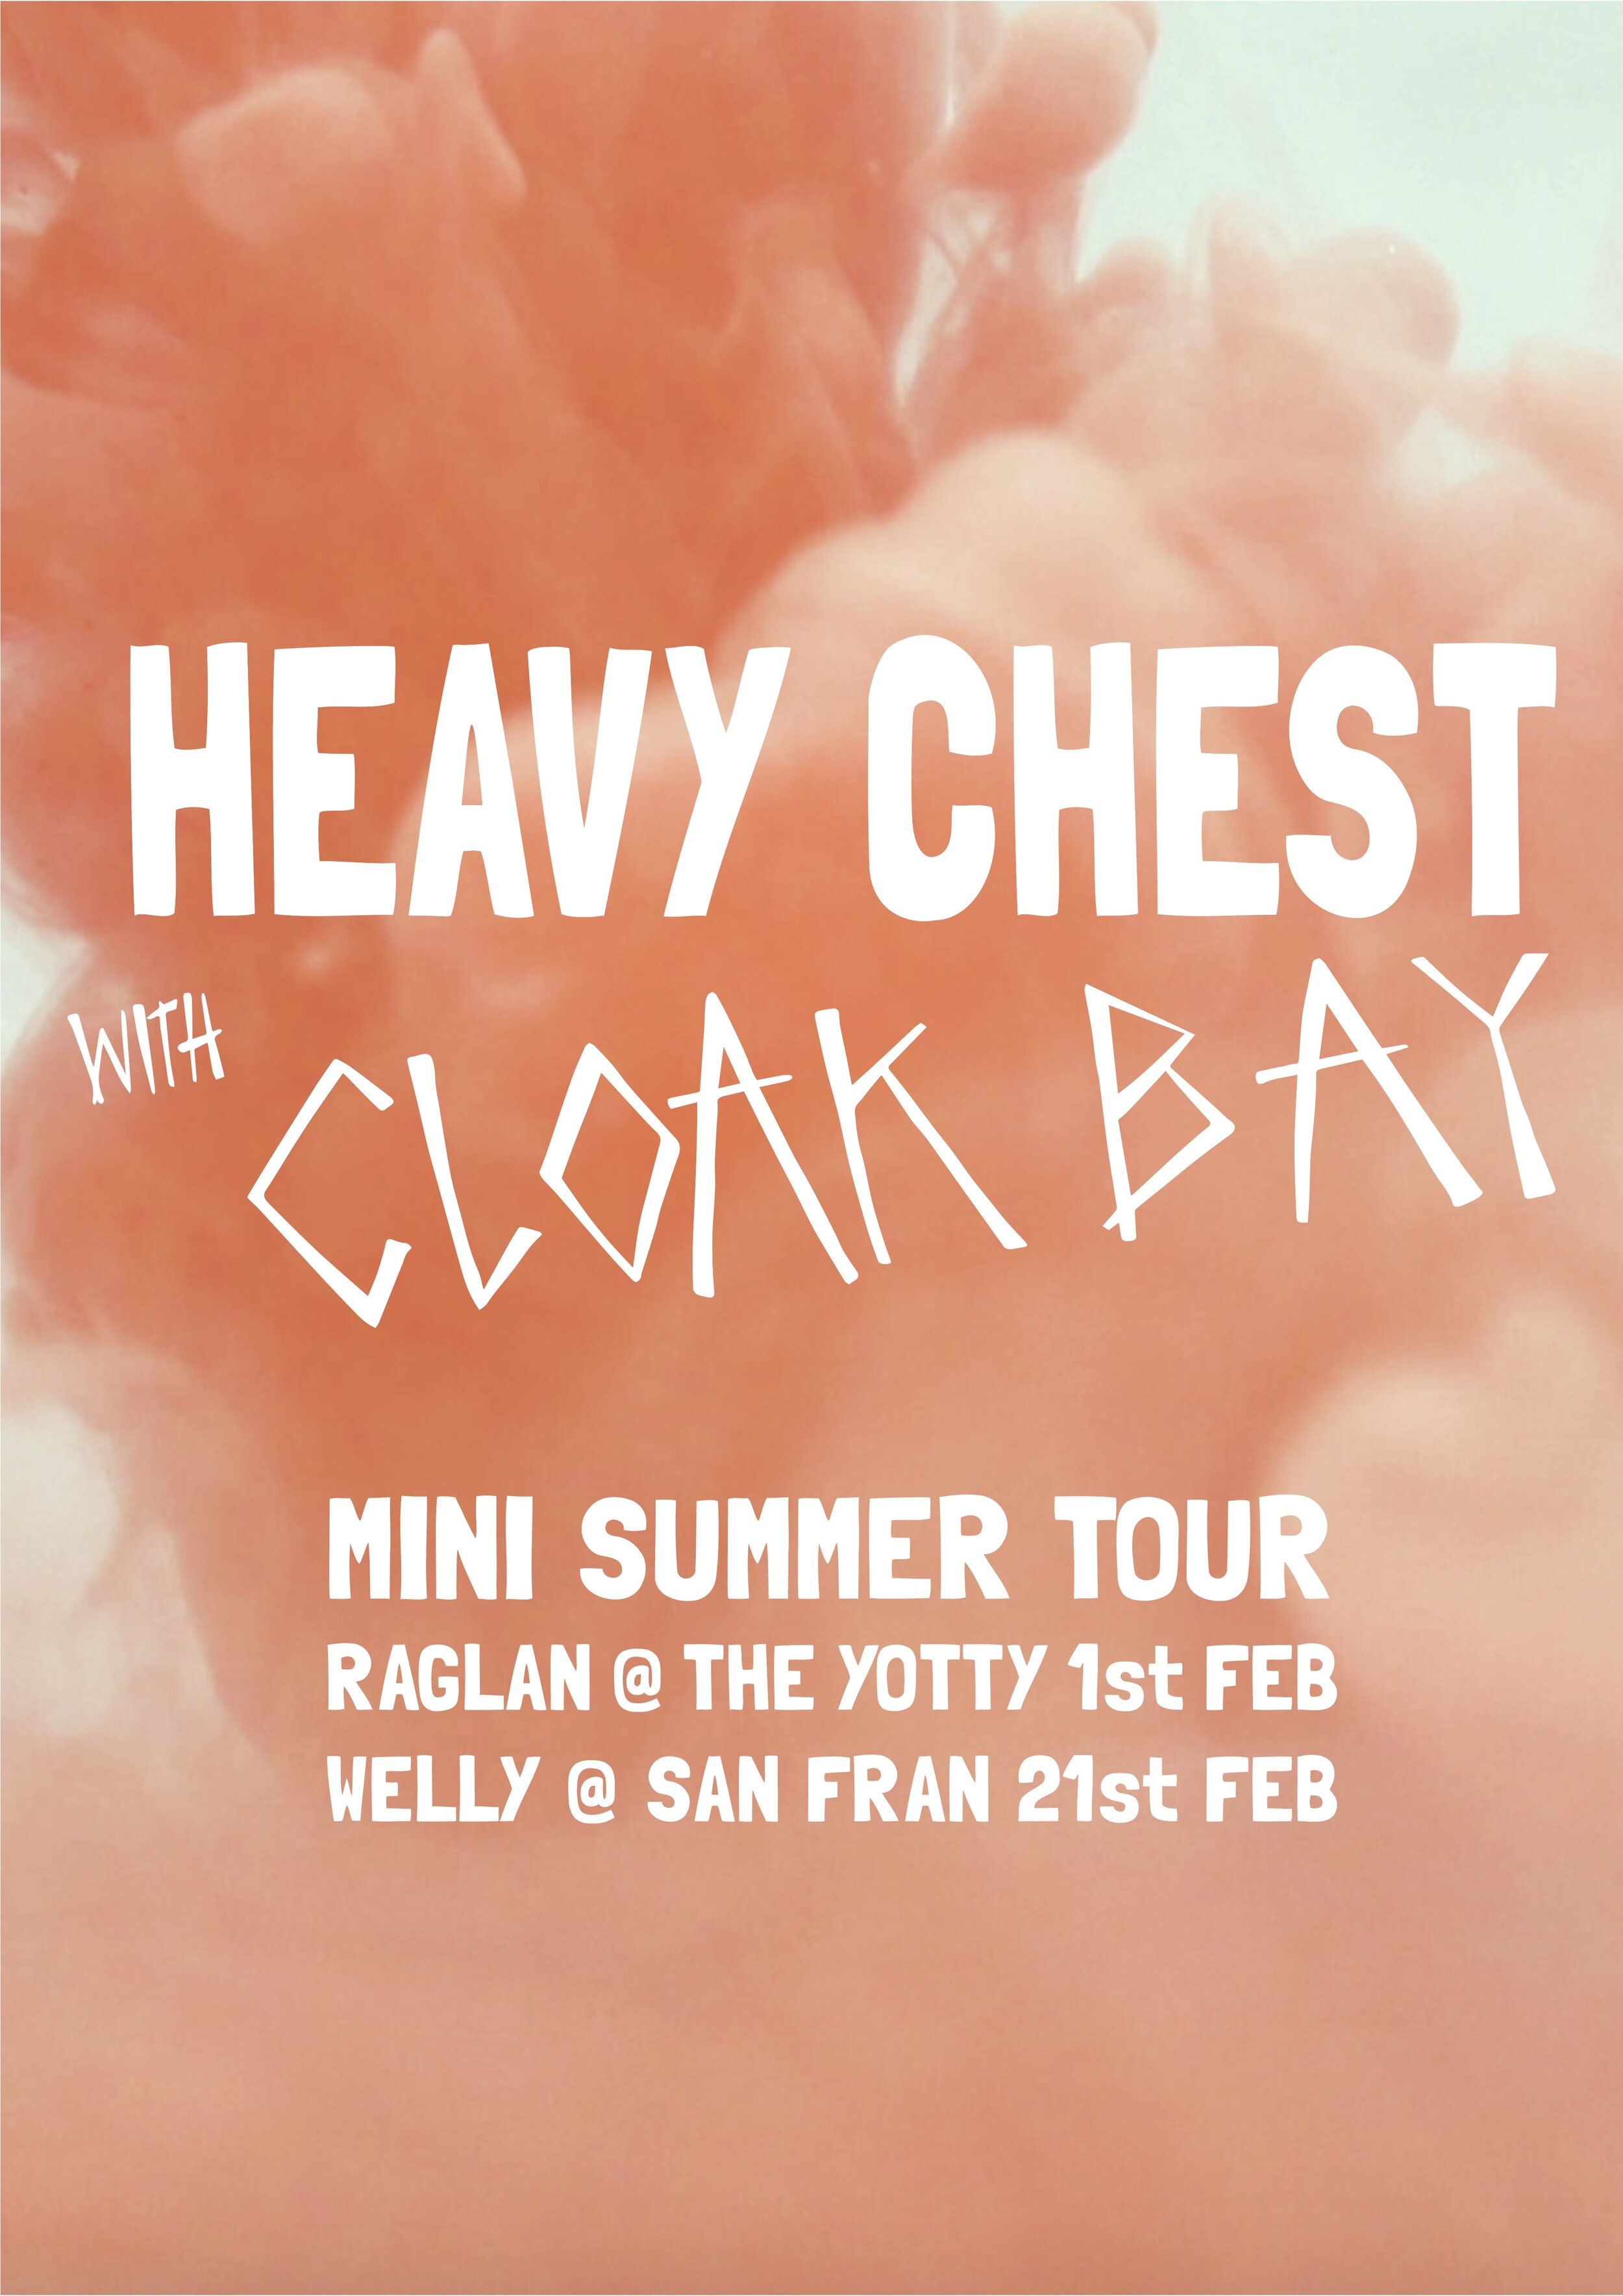 Heavy_Chest-Cloak_Bay-Posters-1.2MB.jpg